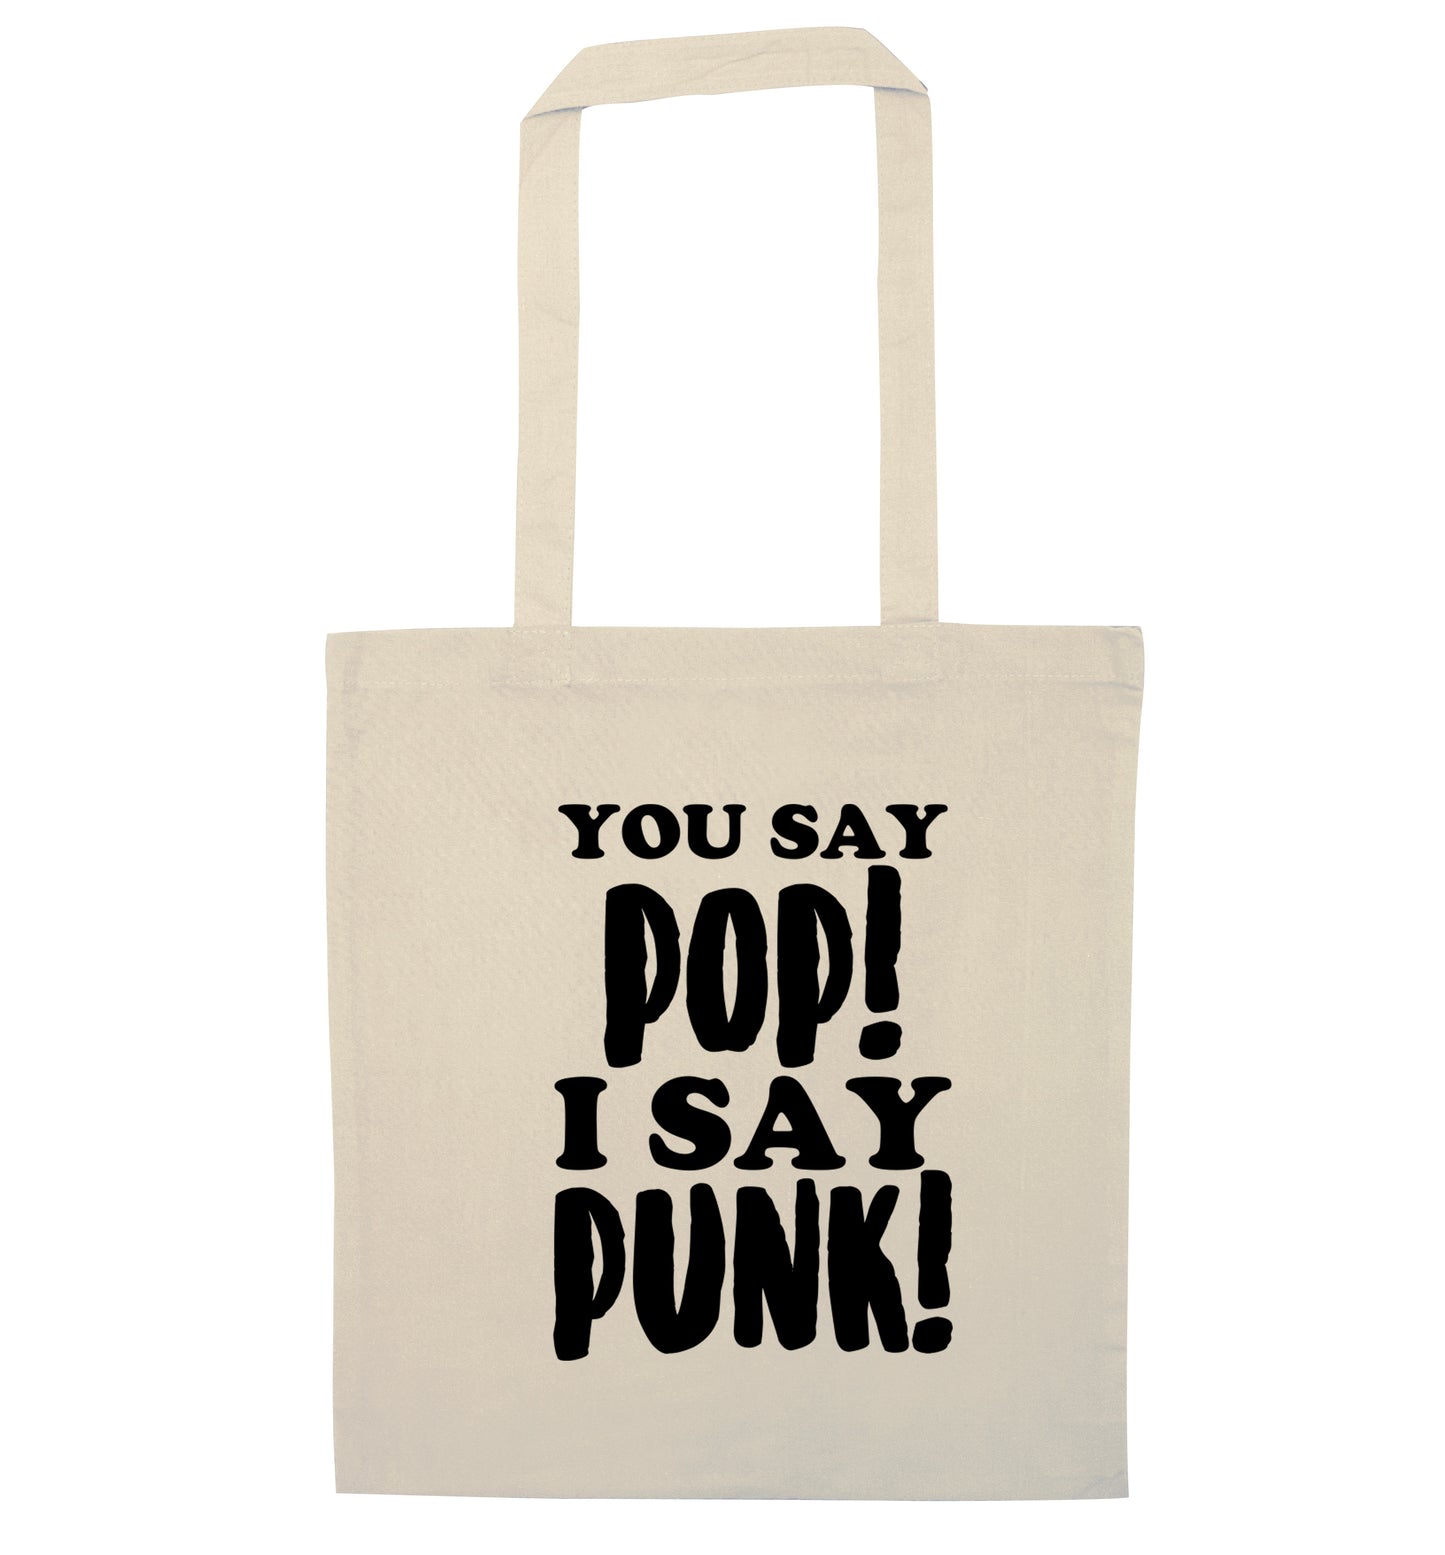 You say pop I say punk! natural tote bag